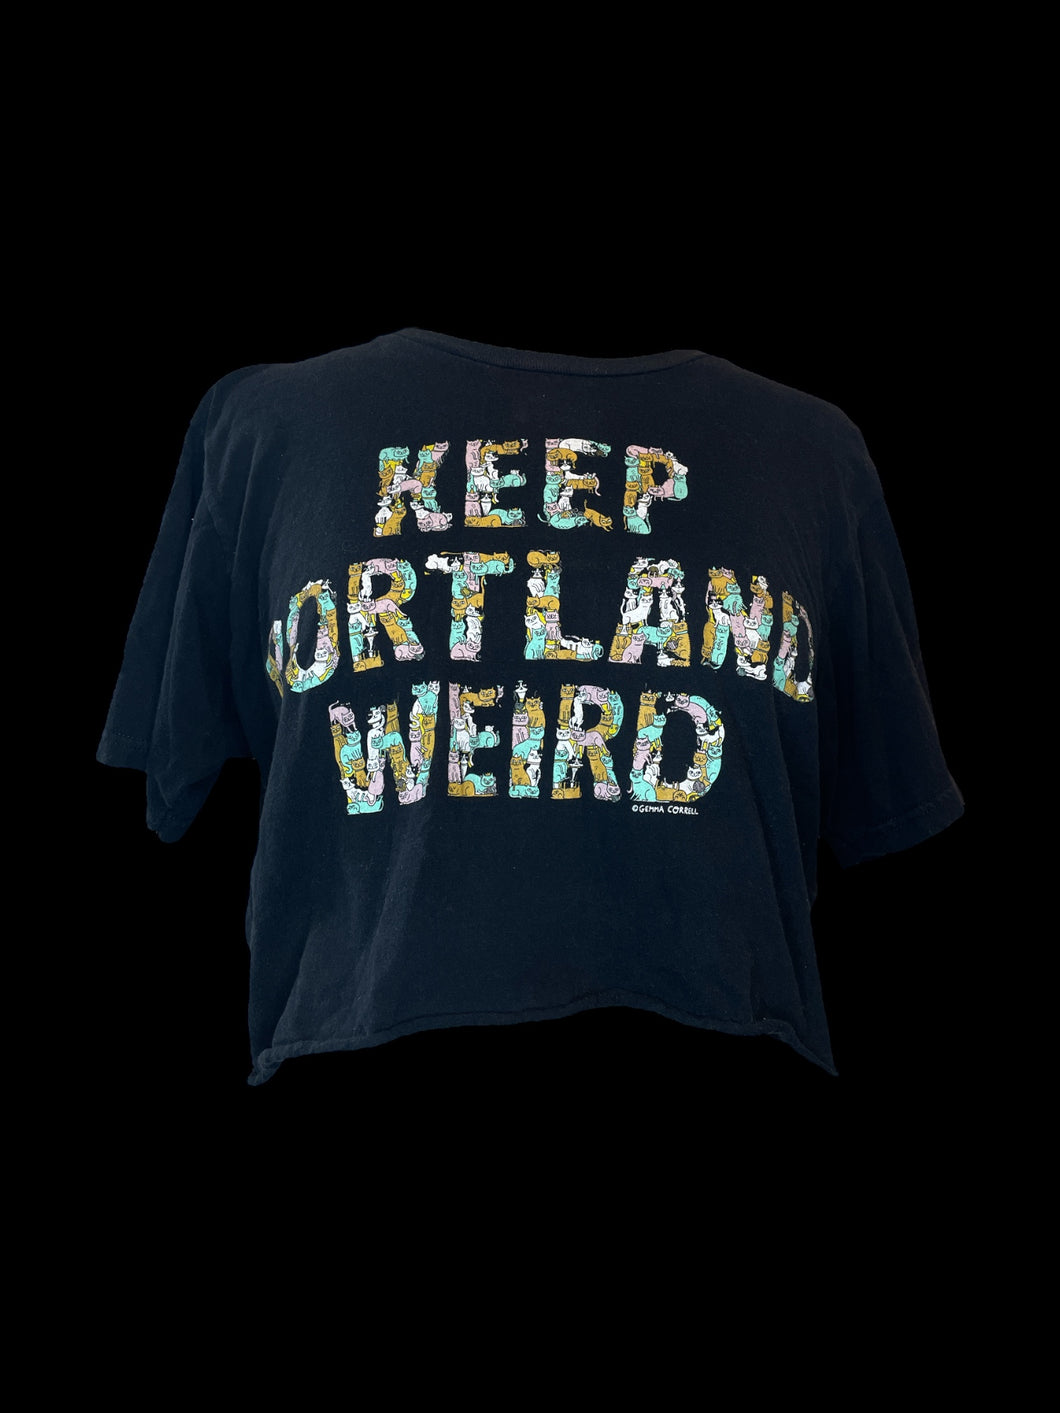 L Black short sleeve crew neck cotton crop top w/ “Keep Portland Weird” graphic made of cats